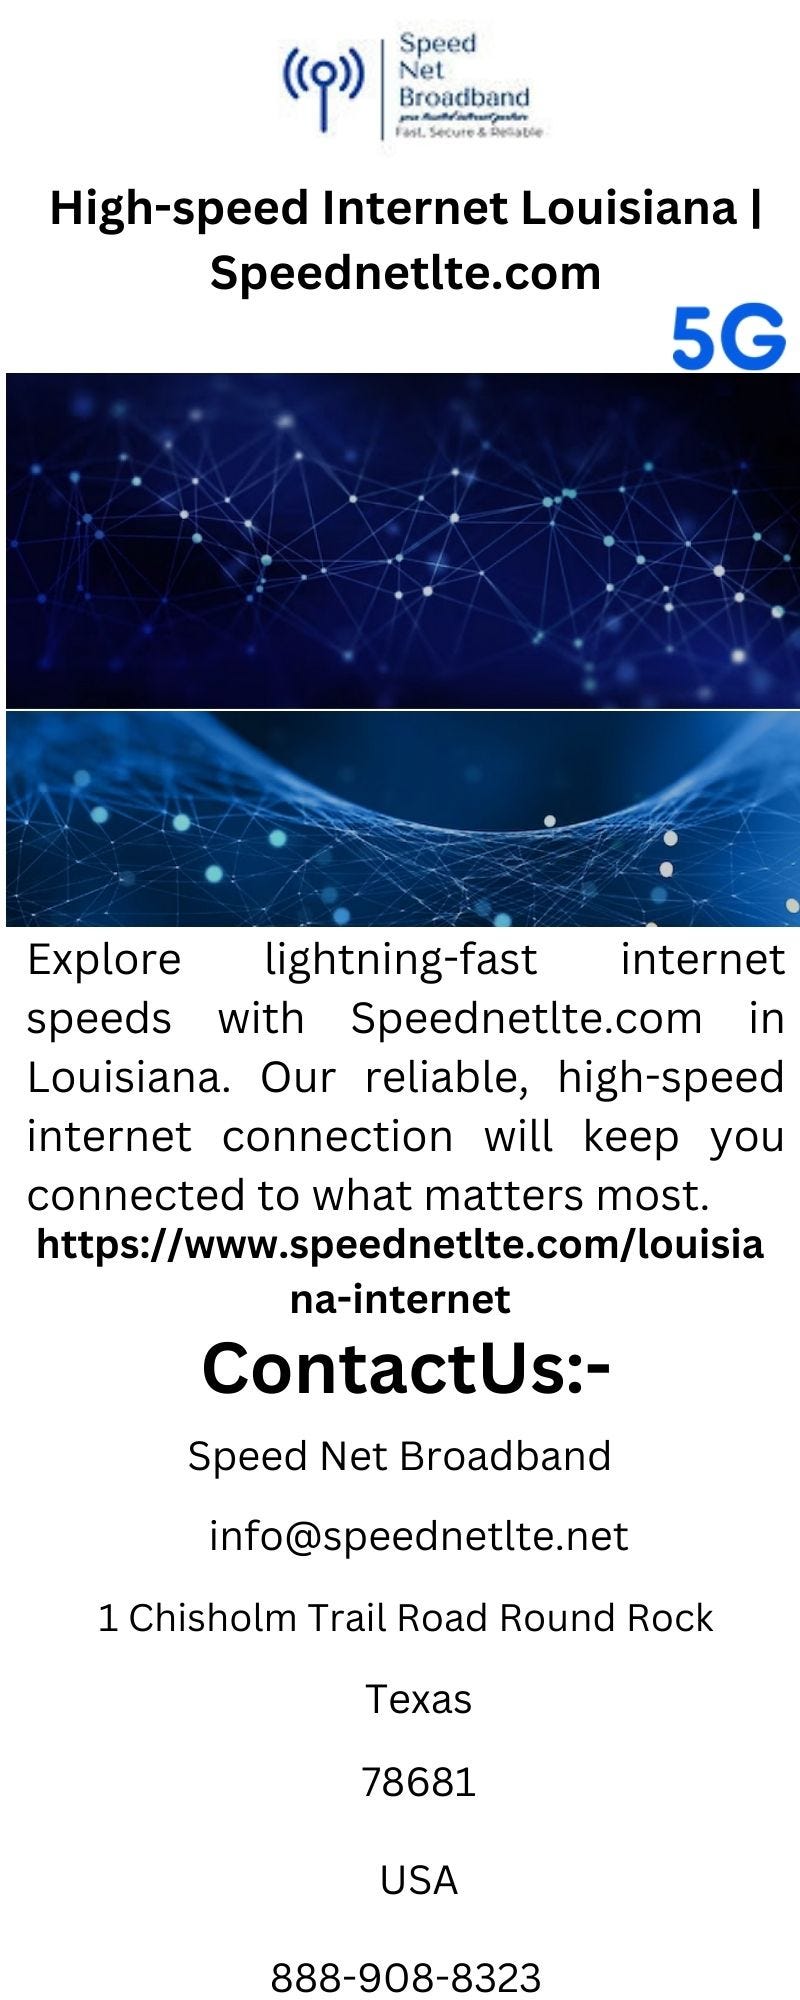 High-speed Internet Louisiana | Speednetlte.com - Speed Net Broadband - Medium